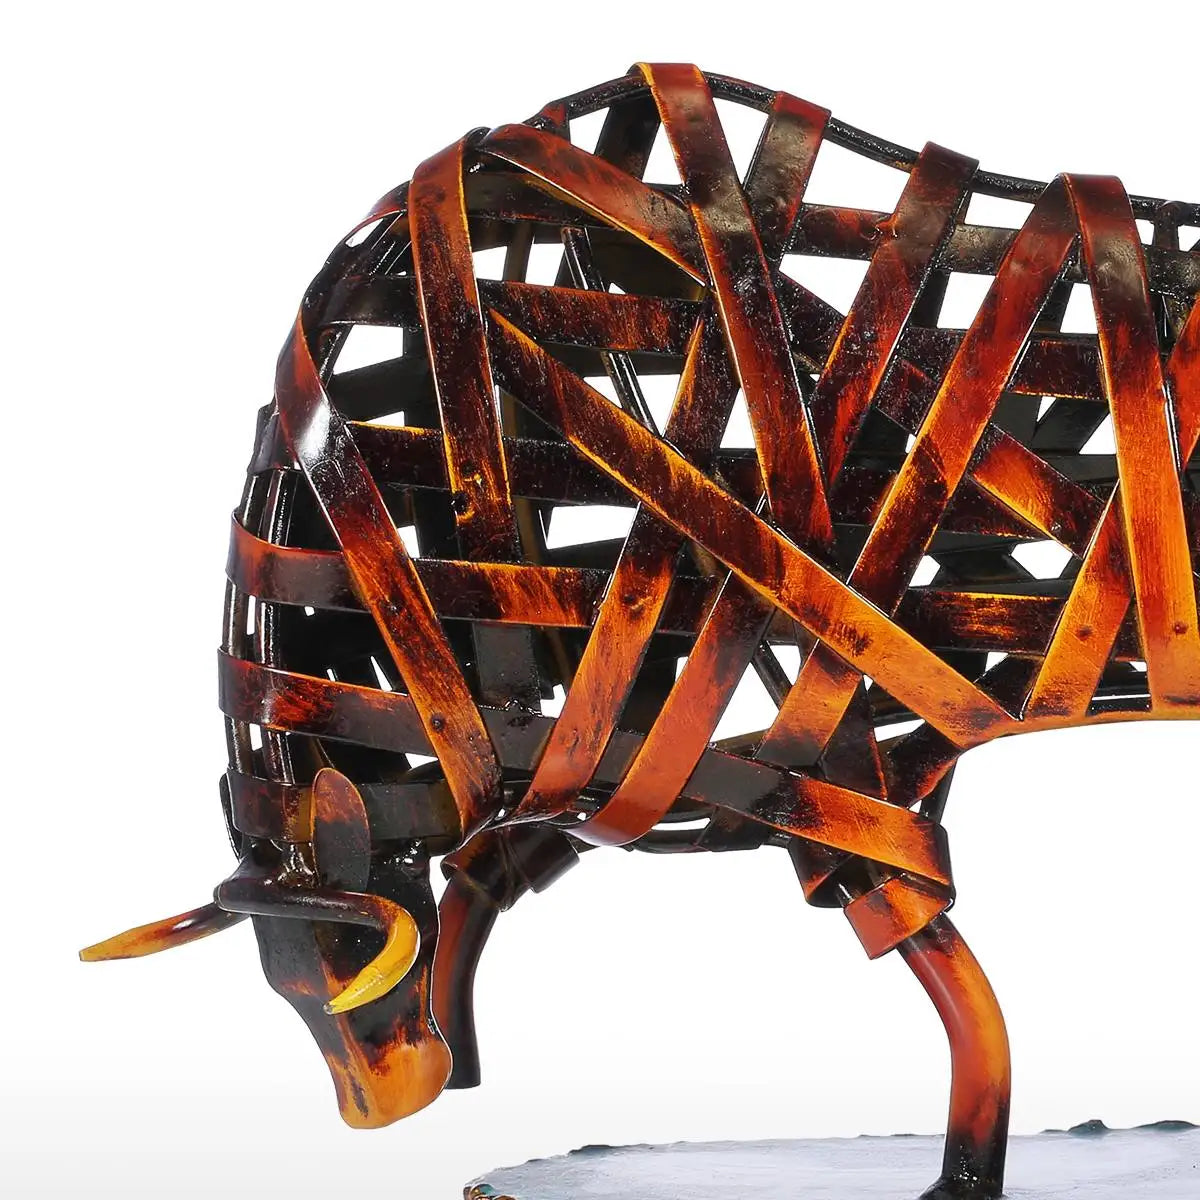 TEEK - Durable Iron-made Braided Cattle Metal Sculpture HOME DECOR theteekdotcom   